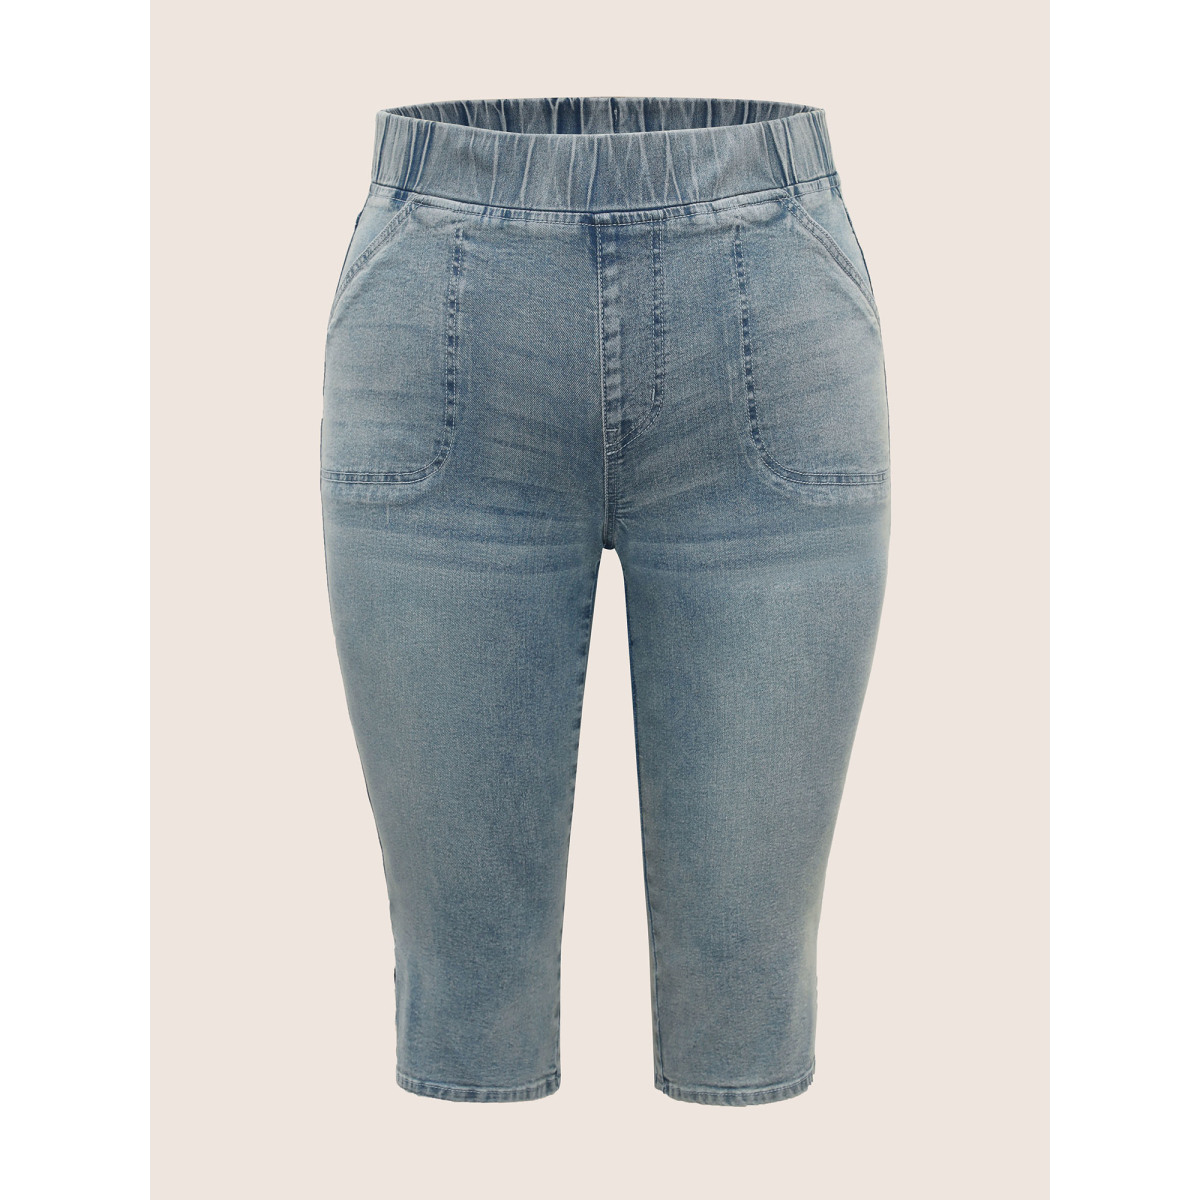 

Plus Size Vintage Elastic Waist Split Side Pull-on Jegging Jeans Women Denimblue Casual Slit High stretch Patch pocket Jeans BloomChic